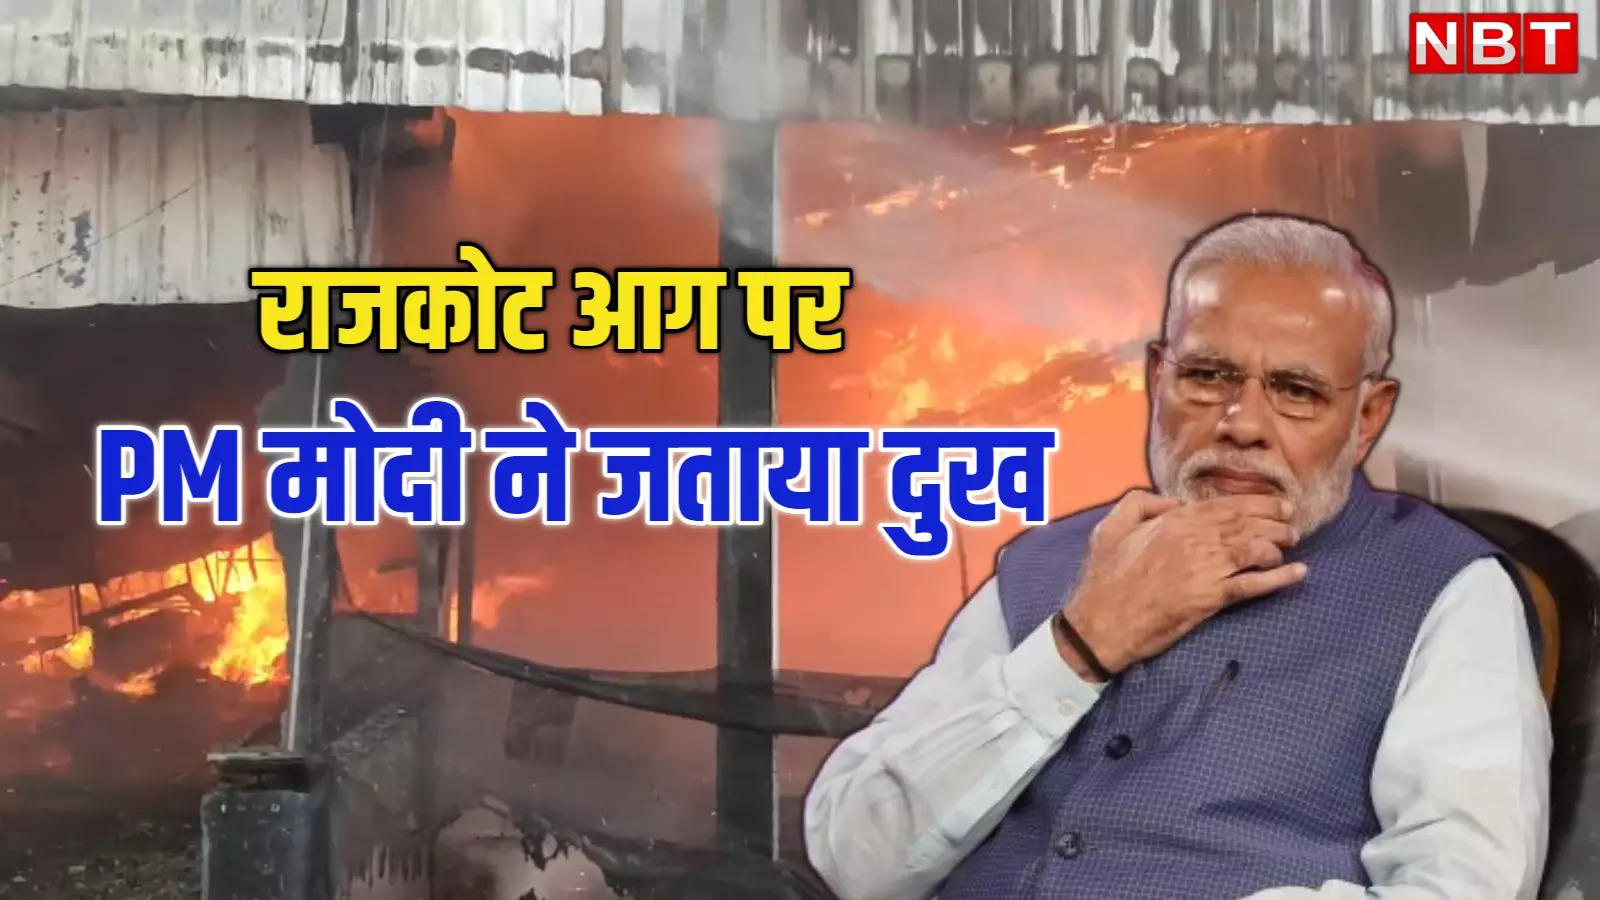 24 people died in a fire in Rajkot, Gujarat, PM Modi expressed grief by tweeting